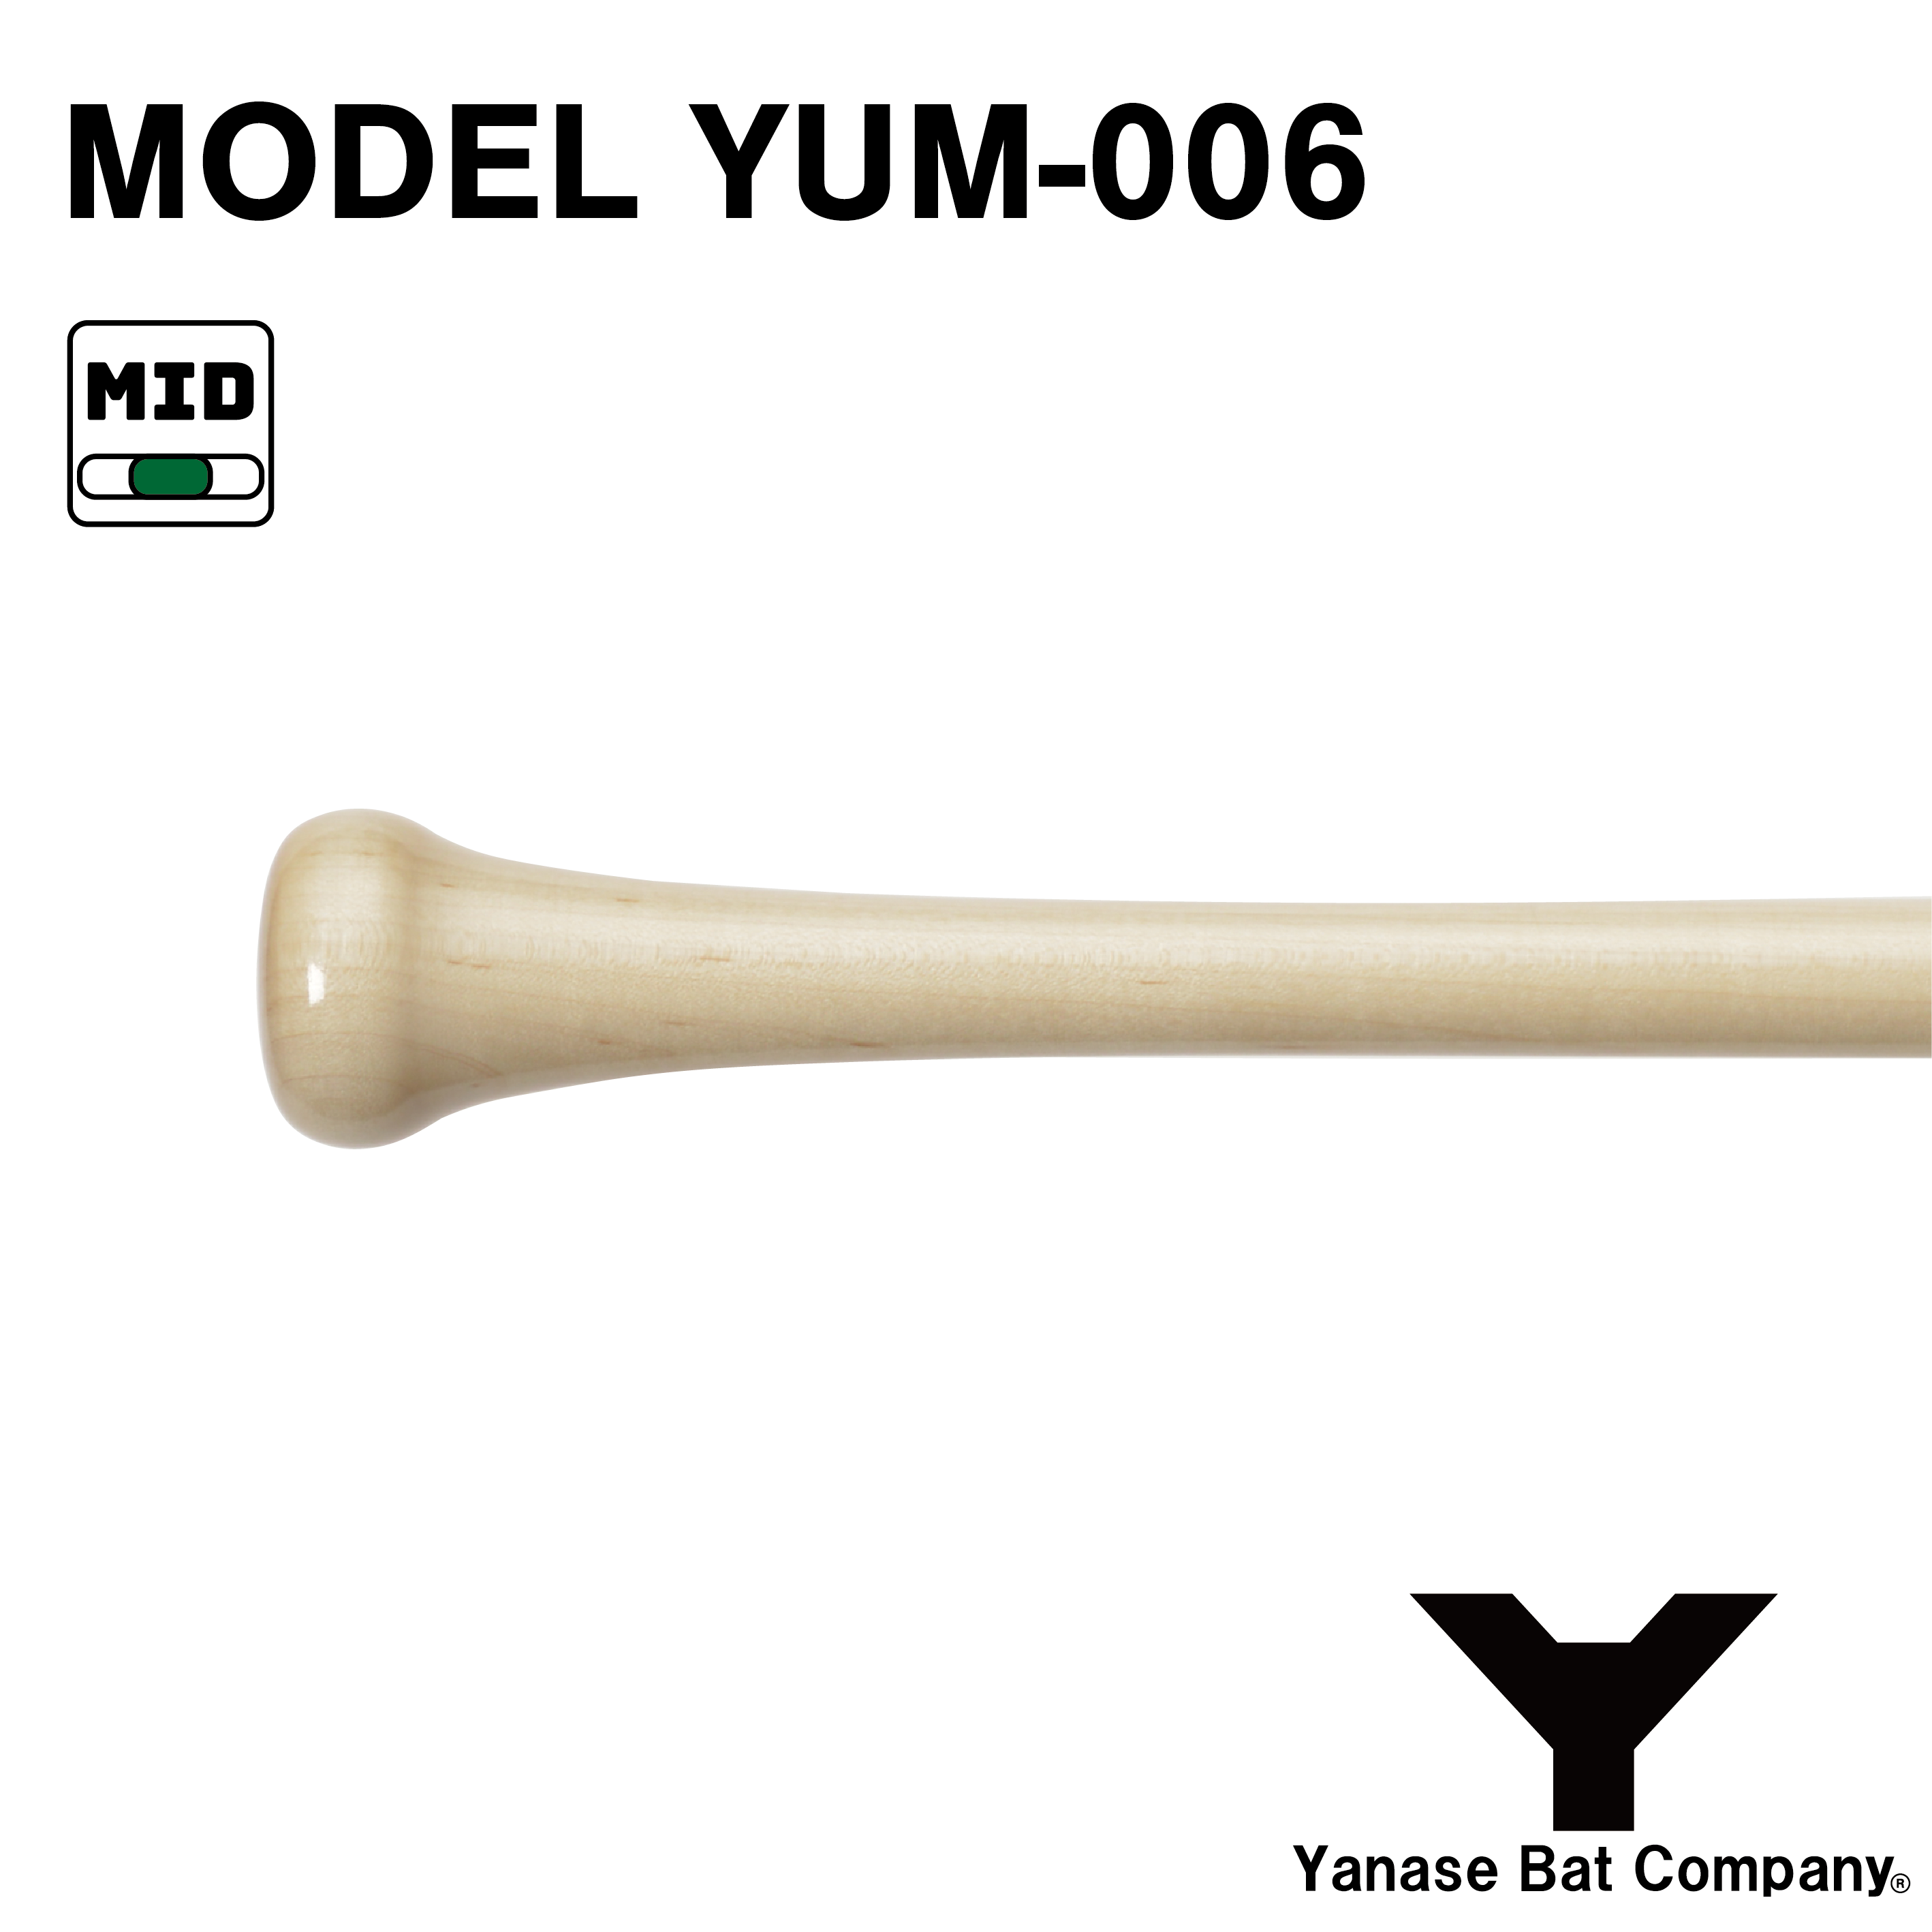 YANASE BAT COMPANY modelYUM-006 jamesjohnston.com